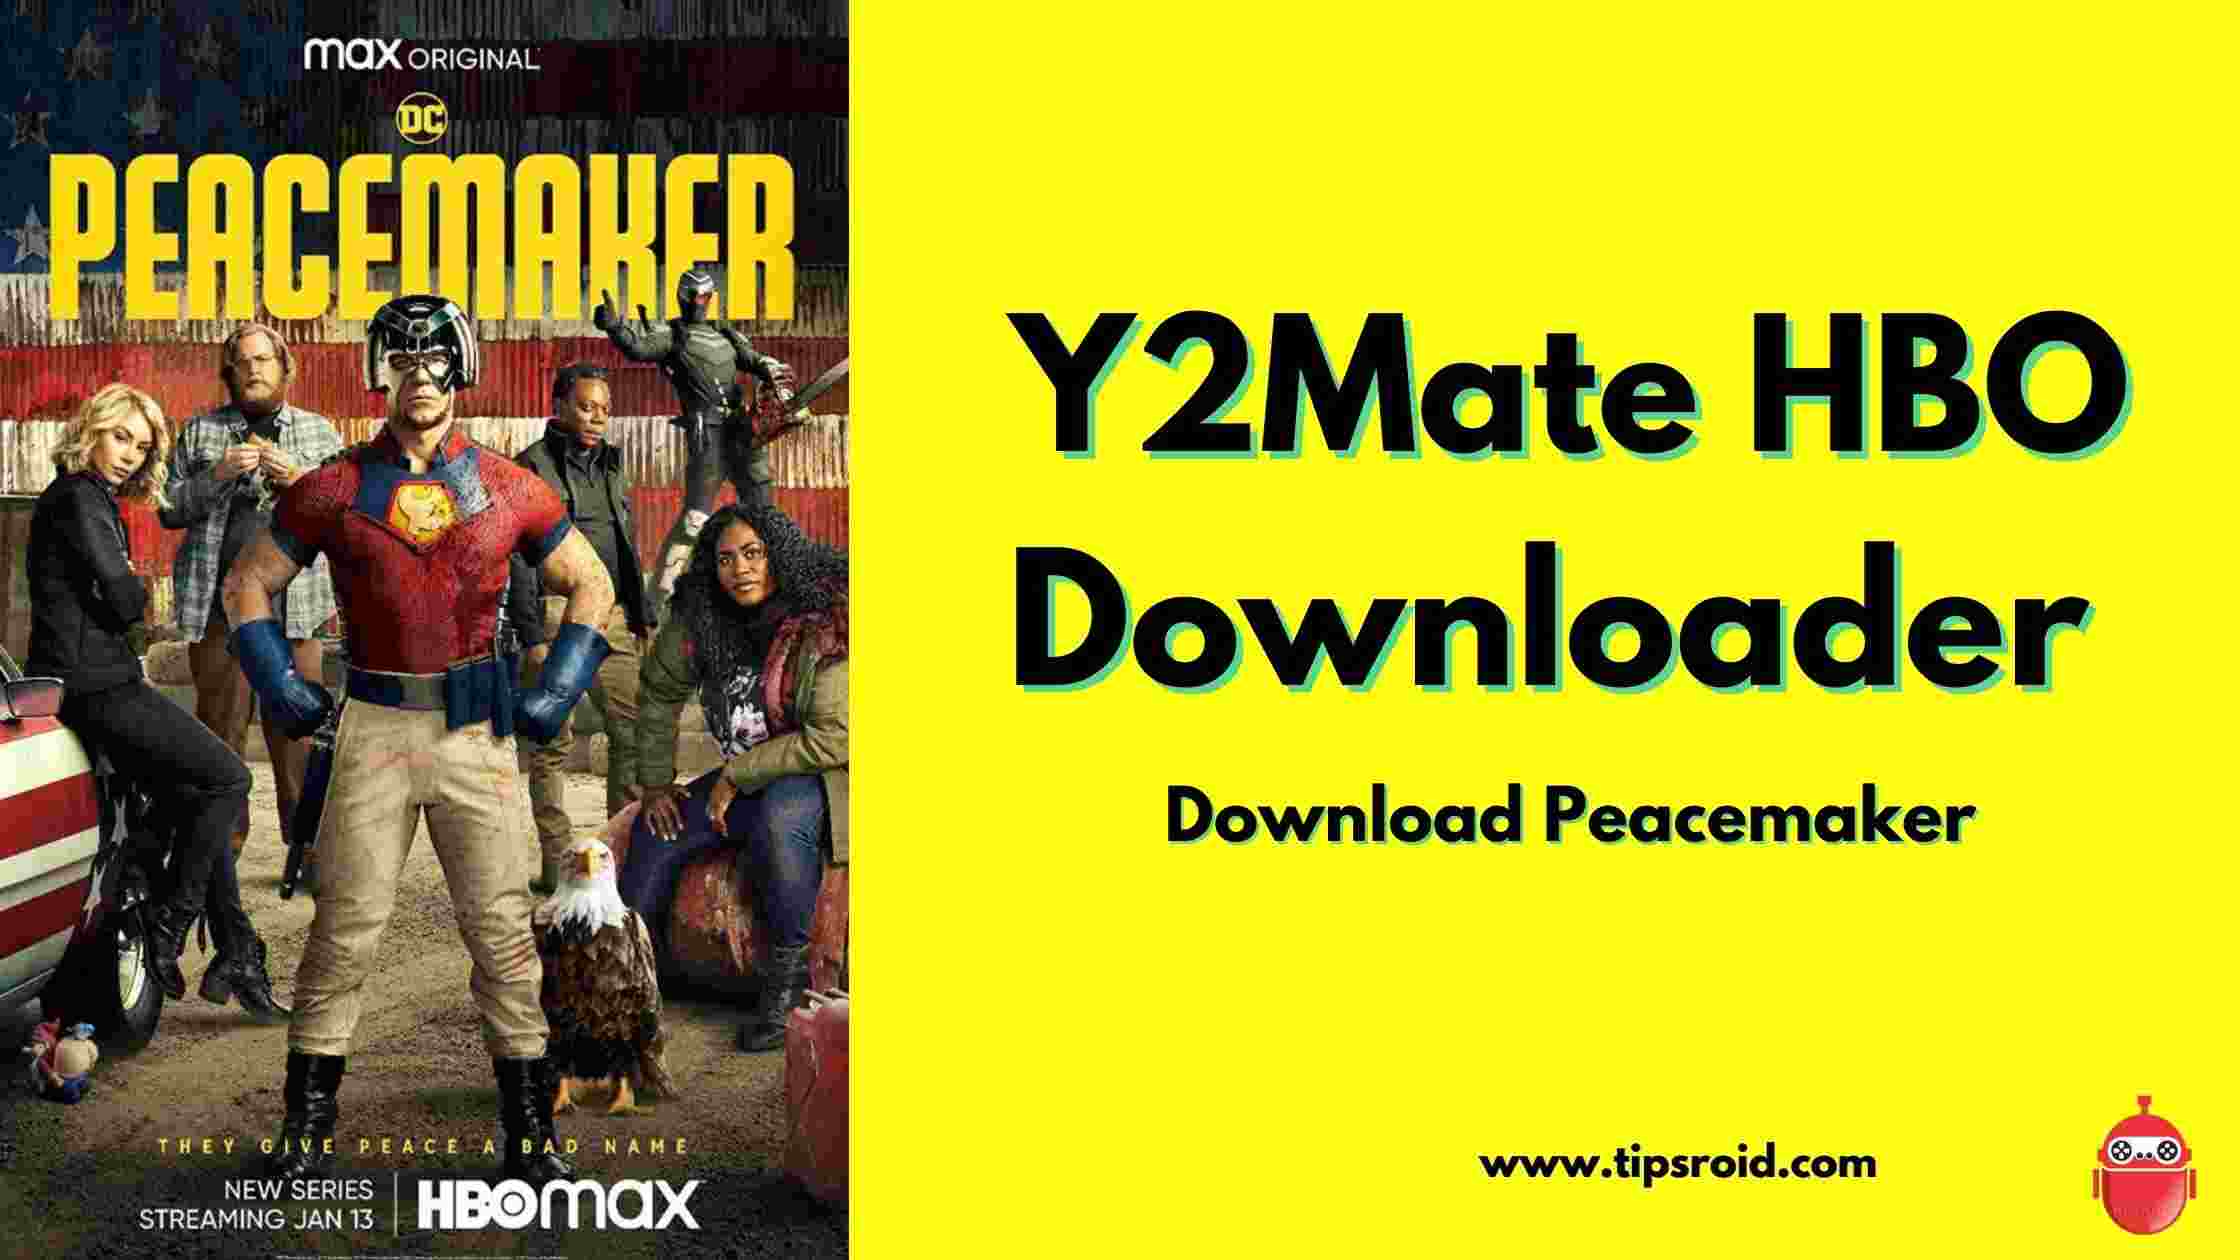 Y2Mate HBO Downloader | Download Peacemaker